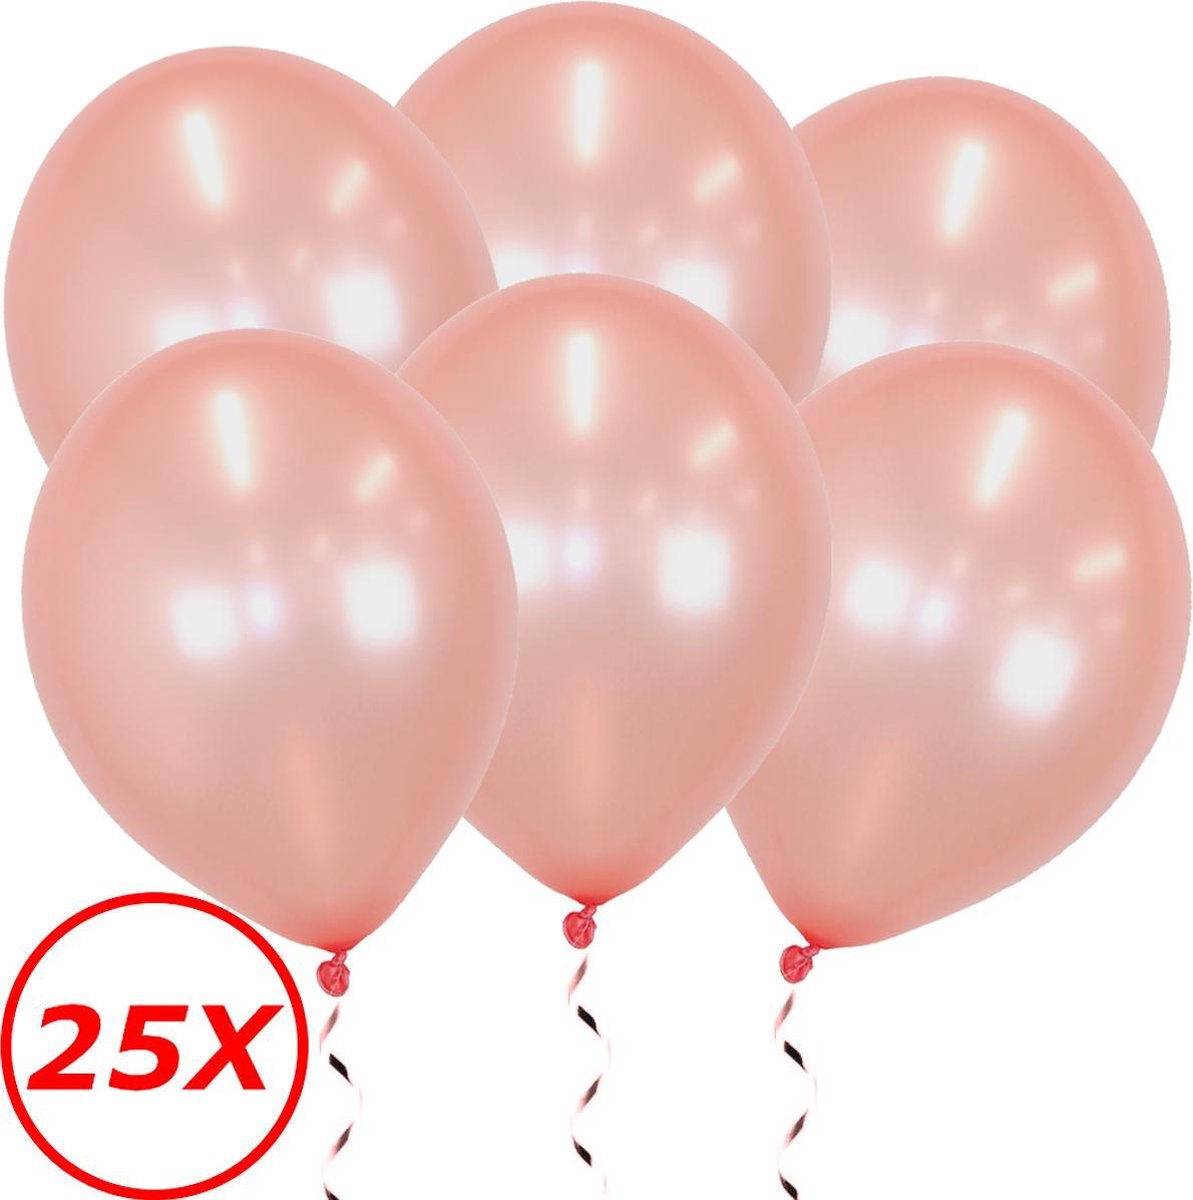 Rosé goud Ballonnen Feestversiering Verjaardag 25st Metallic Roségoud Ballon - BTH